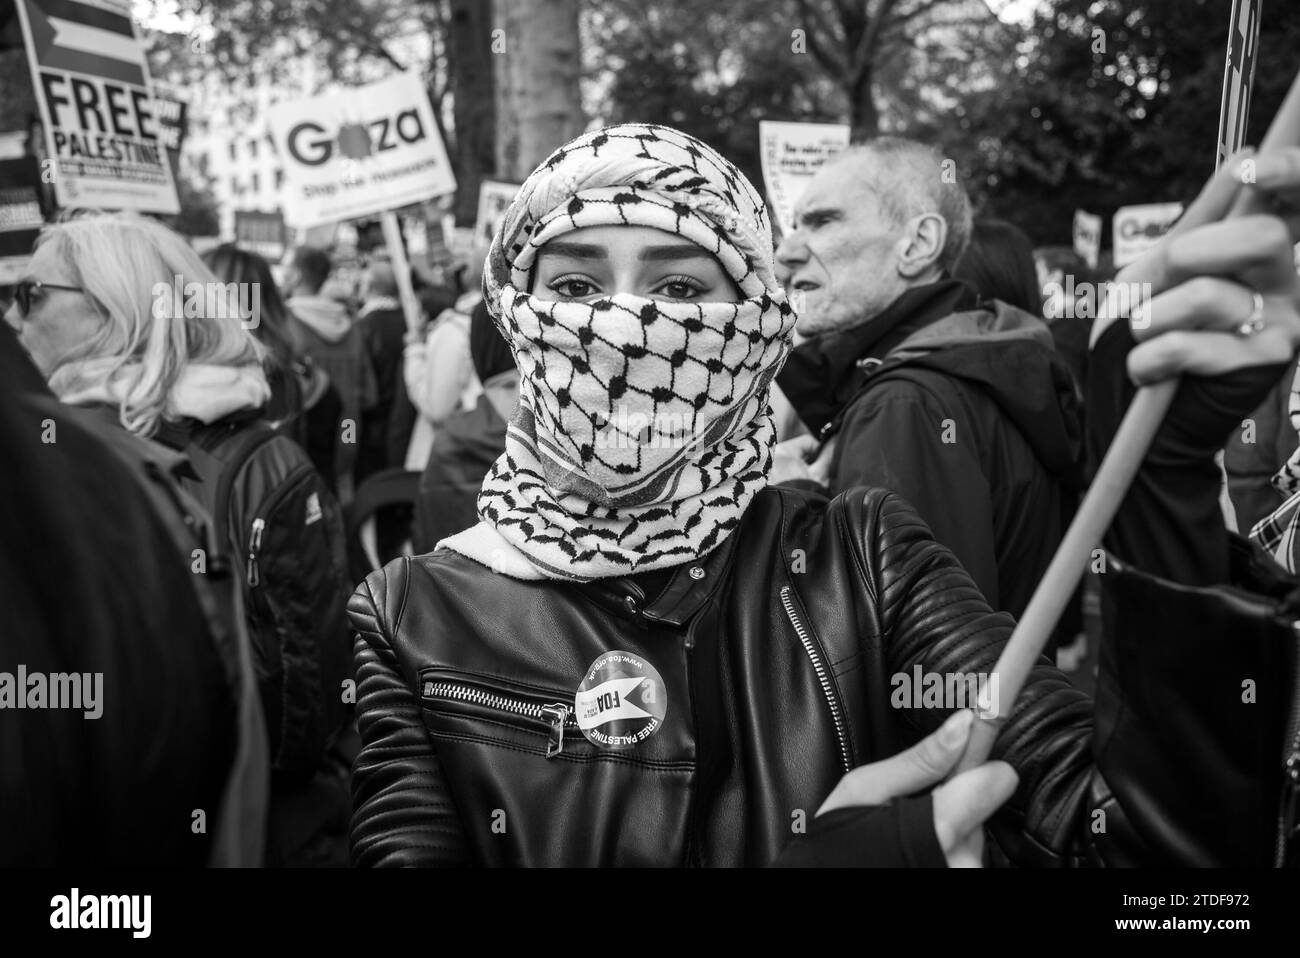 Pro-Palestine demonstration in London / UK Stock Photo